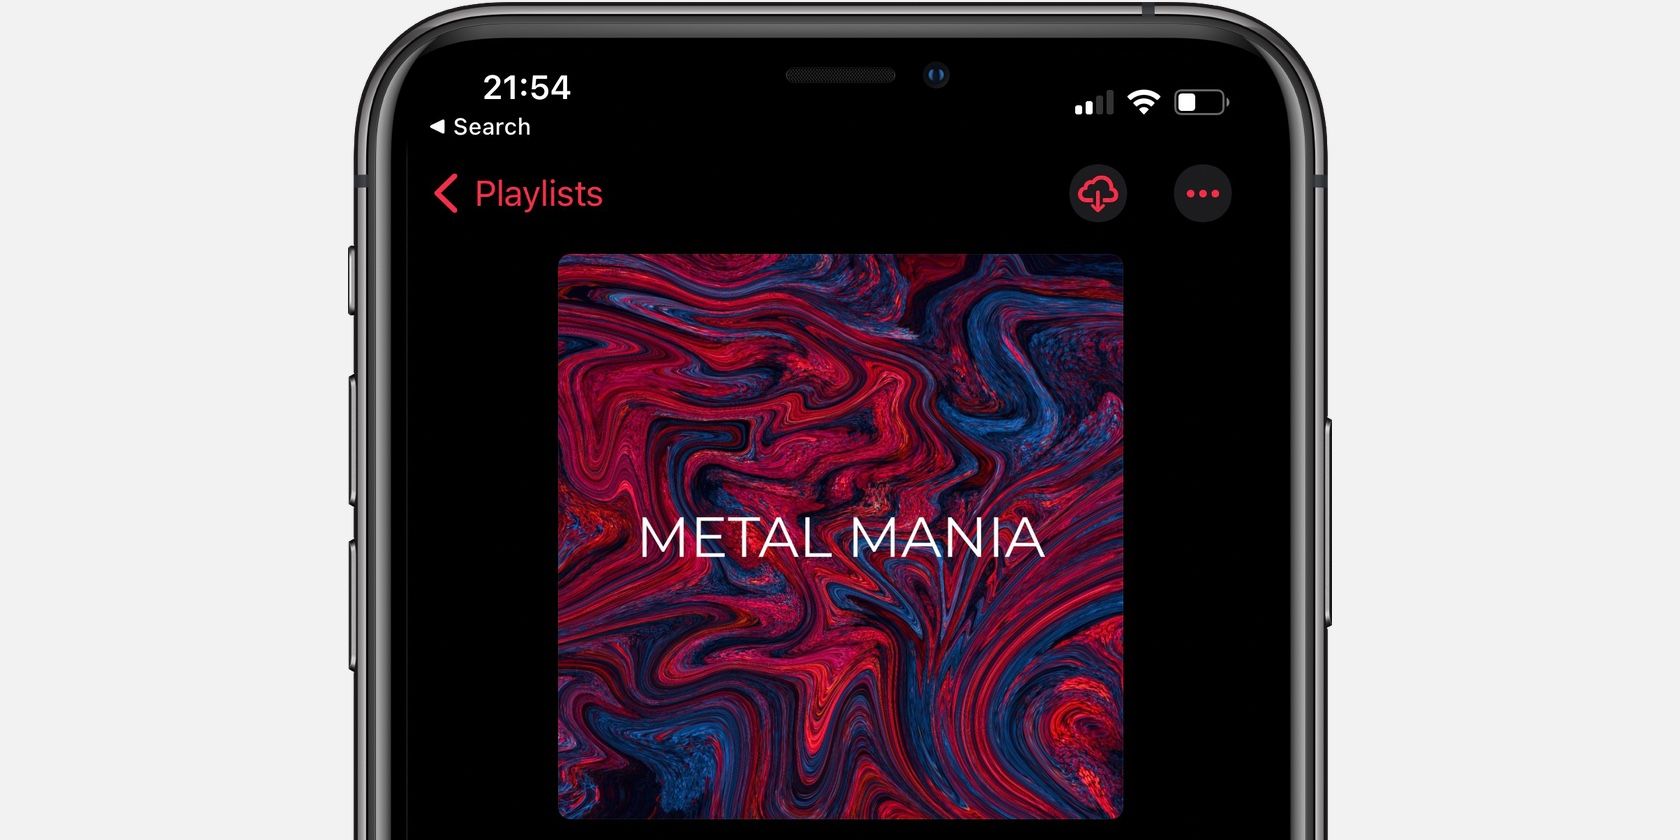 Custom playlist cover created for Apple Music